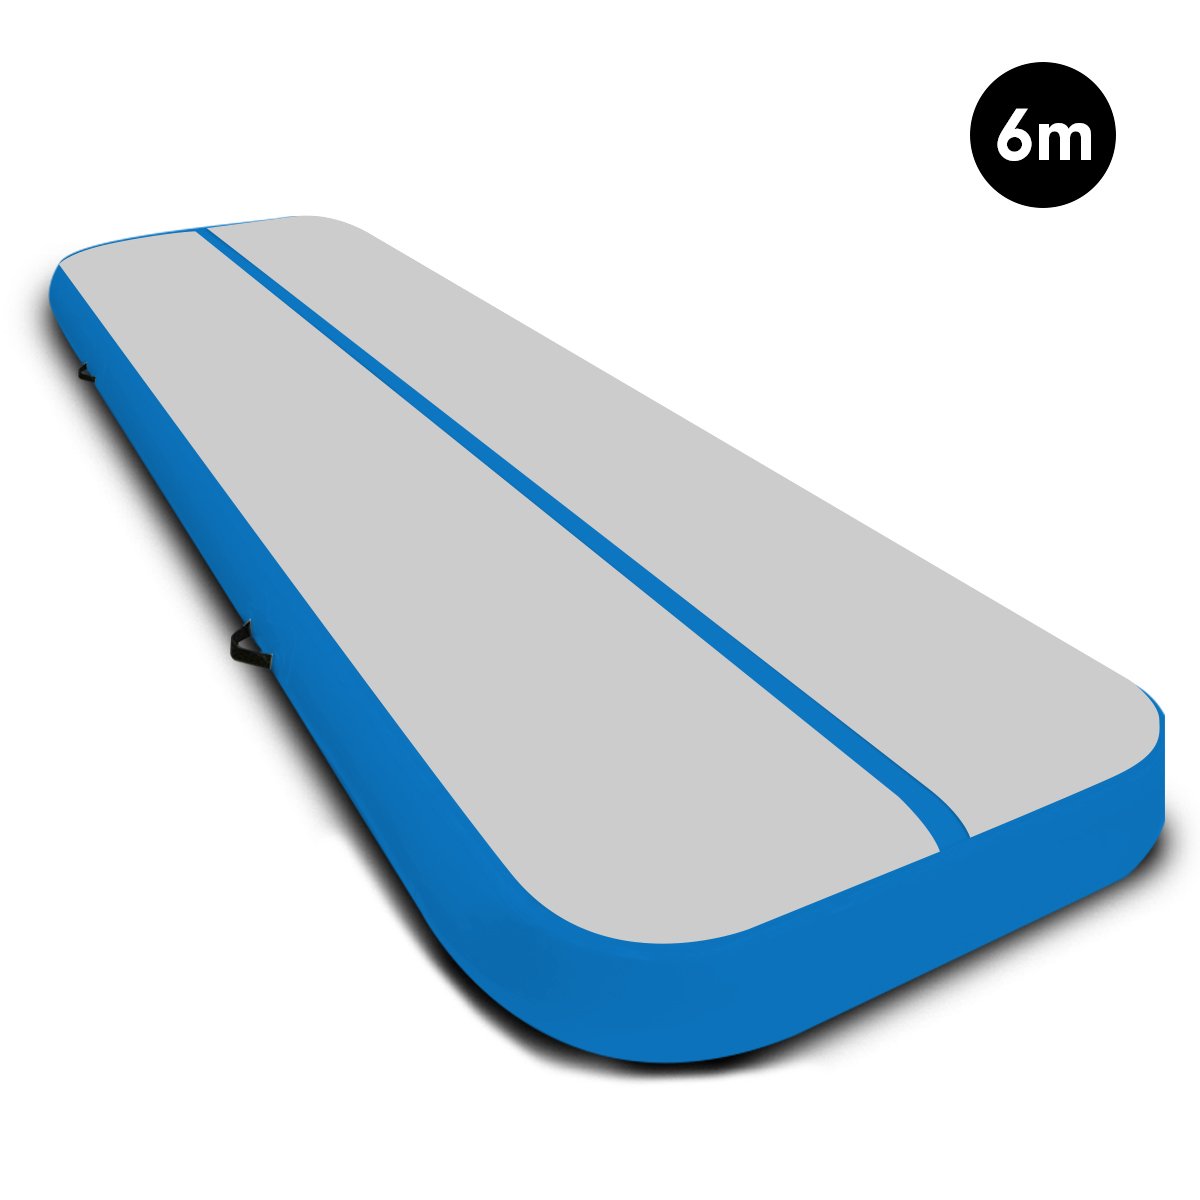 6m x 2m Air Track Gymnastics Mat Tumbling Exercise - Grey Blue 2